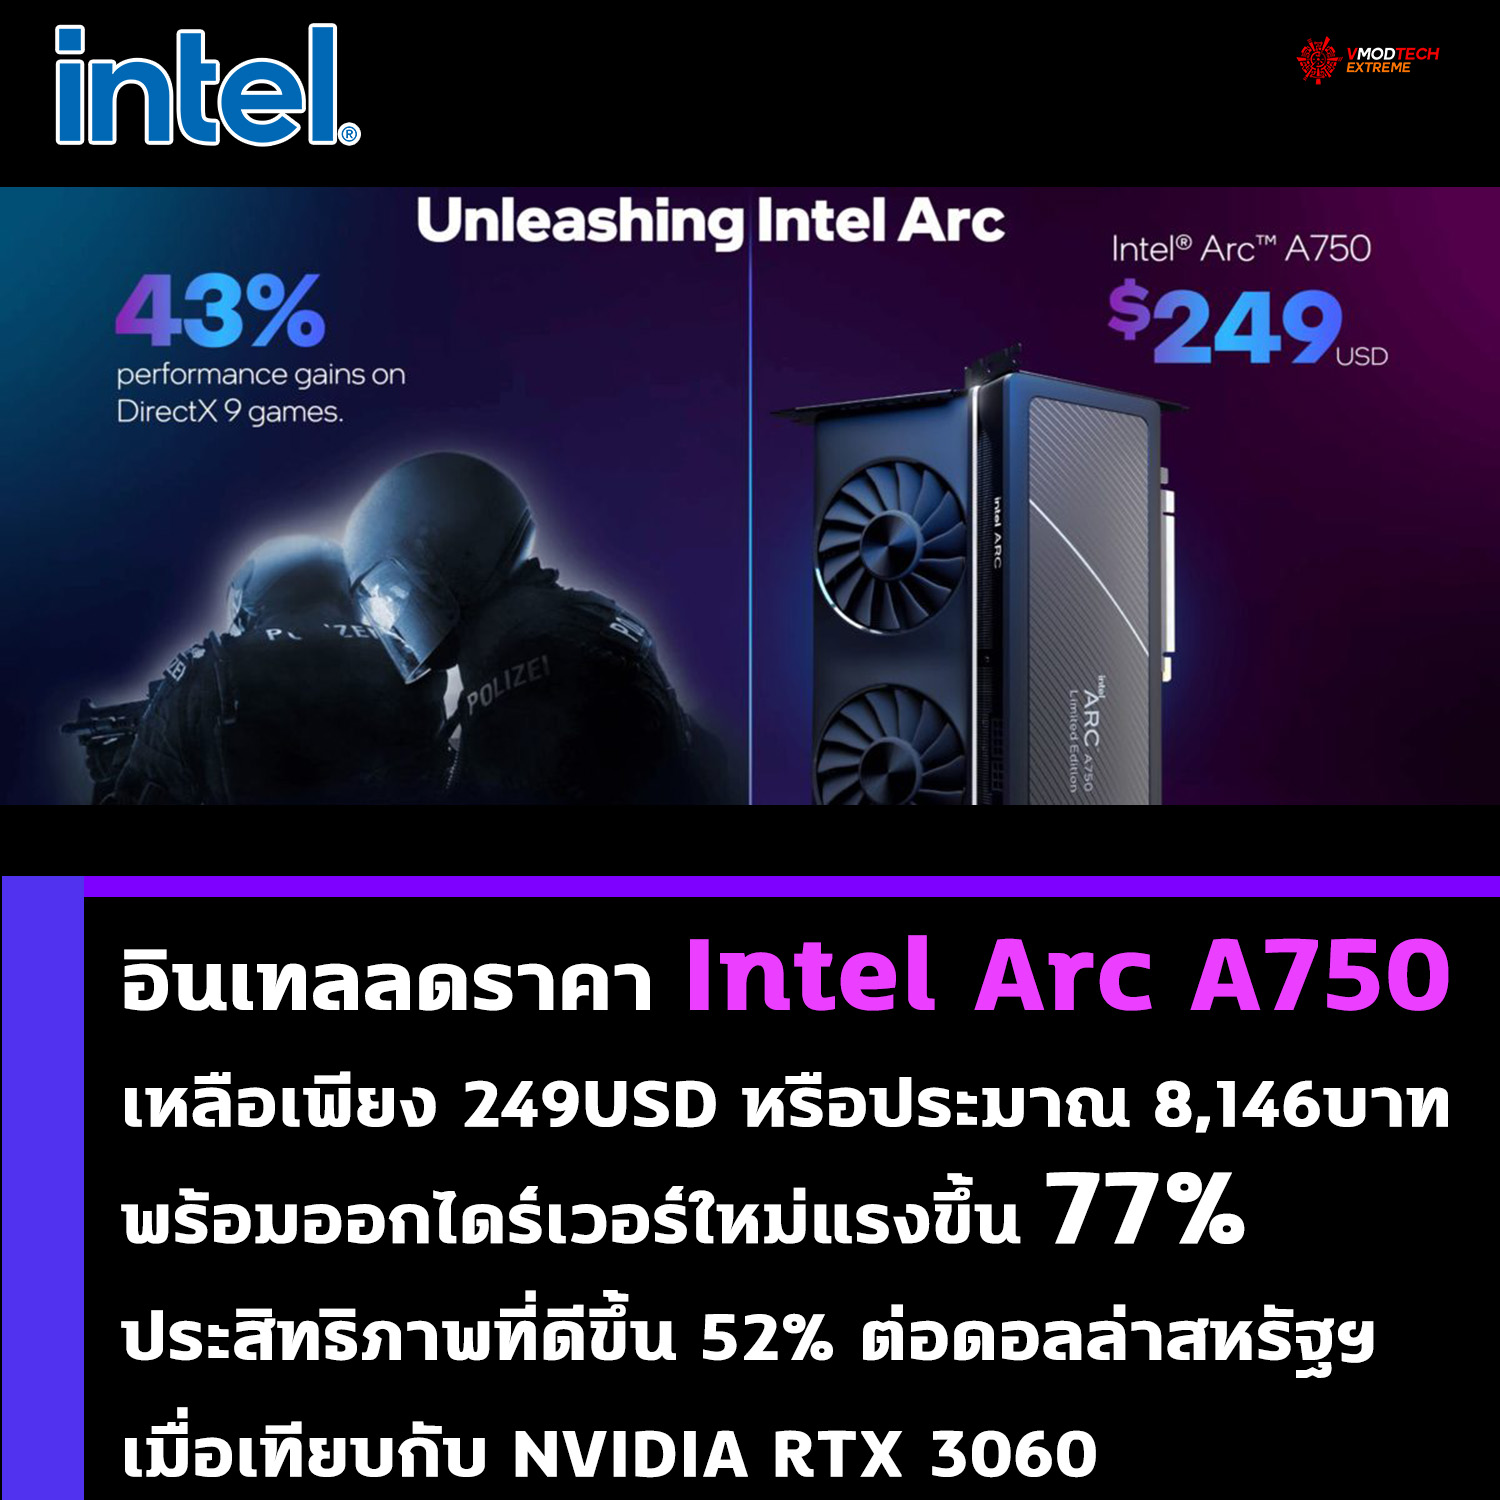 intel arc a750 249usd อินเทลลดราคาการ์ดจอ Intel Arc A750 เหลือเพียง 249USD หรือประมาณ 8,146บาท พร้อมออกไดร์เวอร์ใหม่เพิ่มความแรงท้าชนคู่แข่งที่คุ้มกว่าถูกกว่า